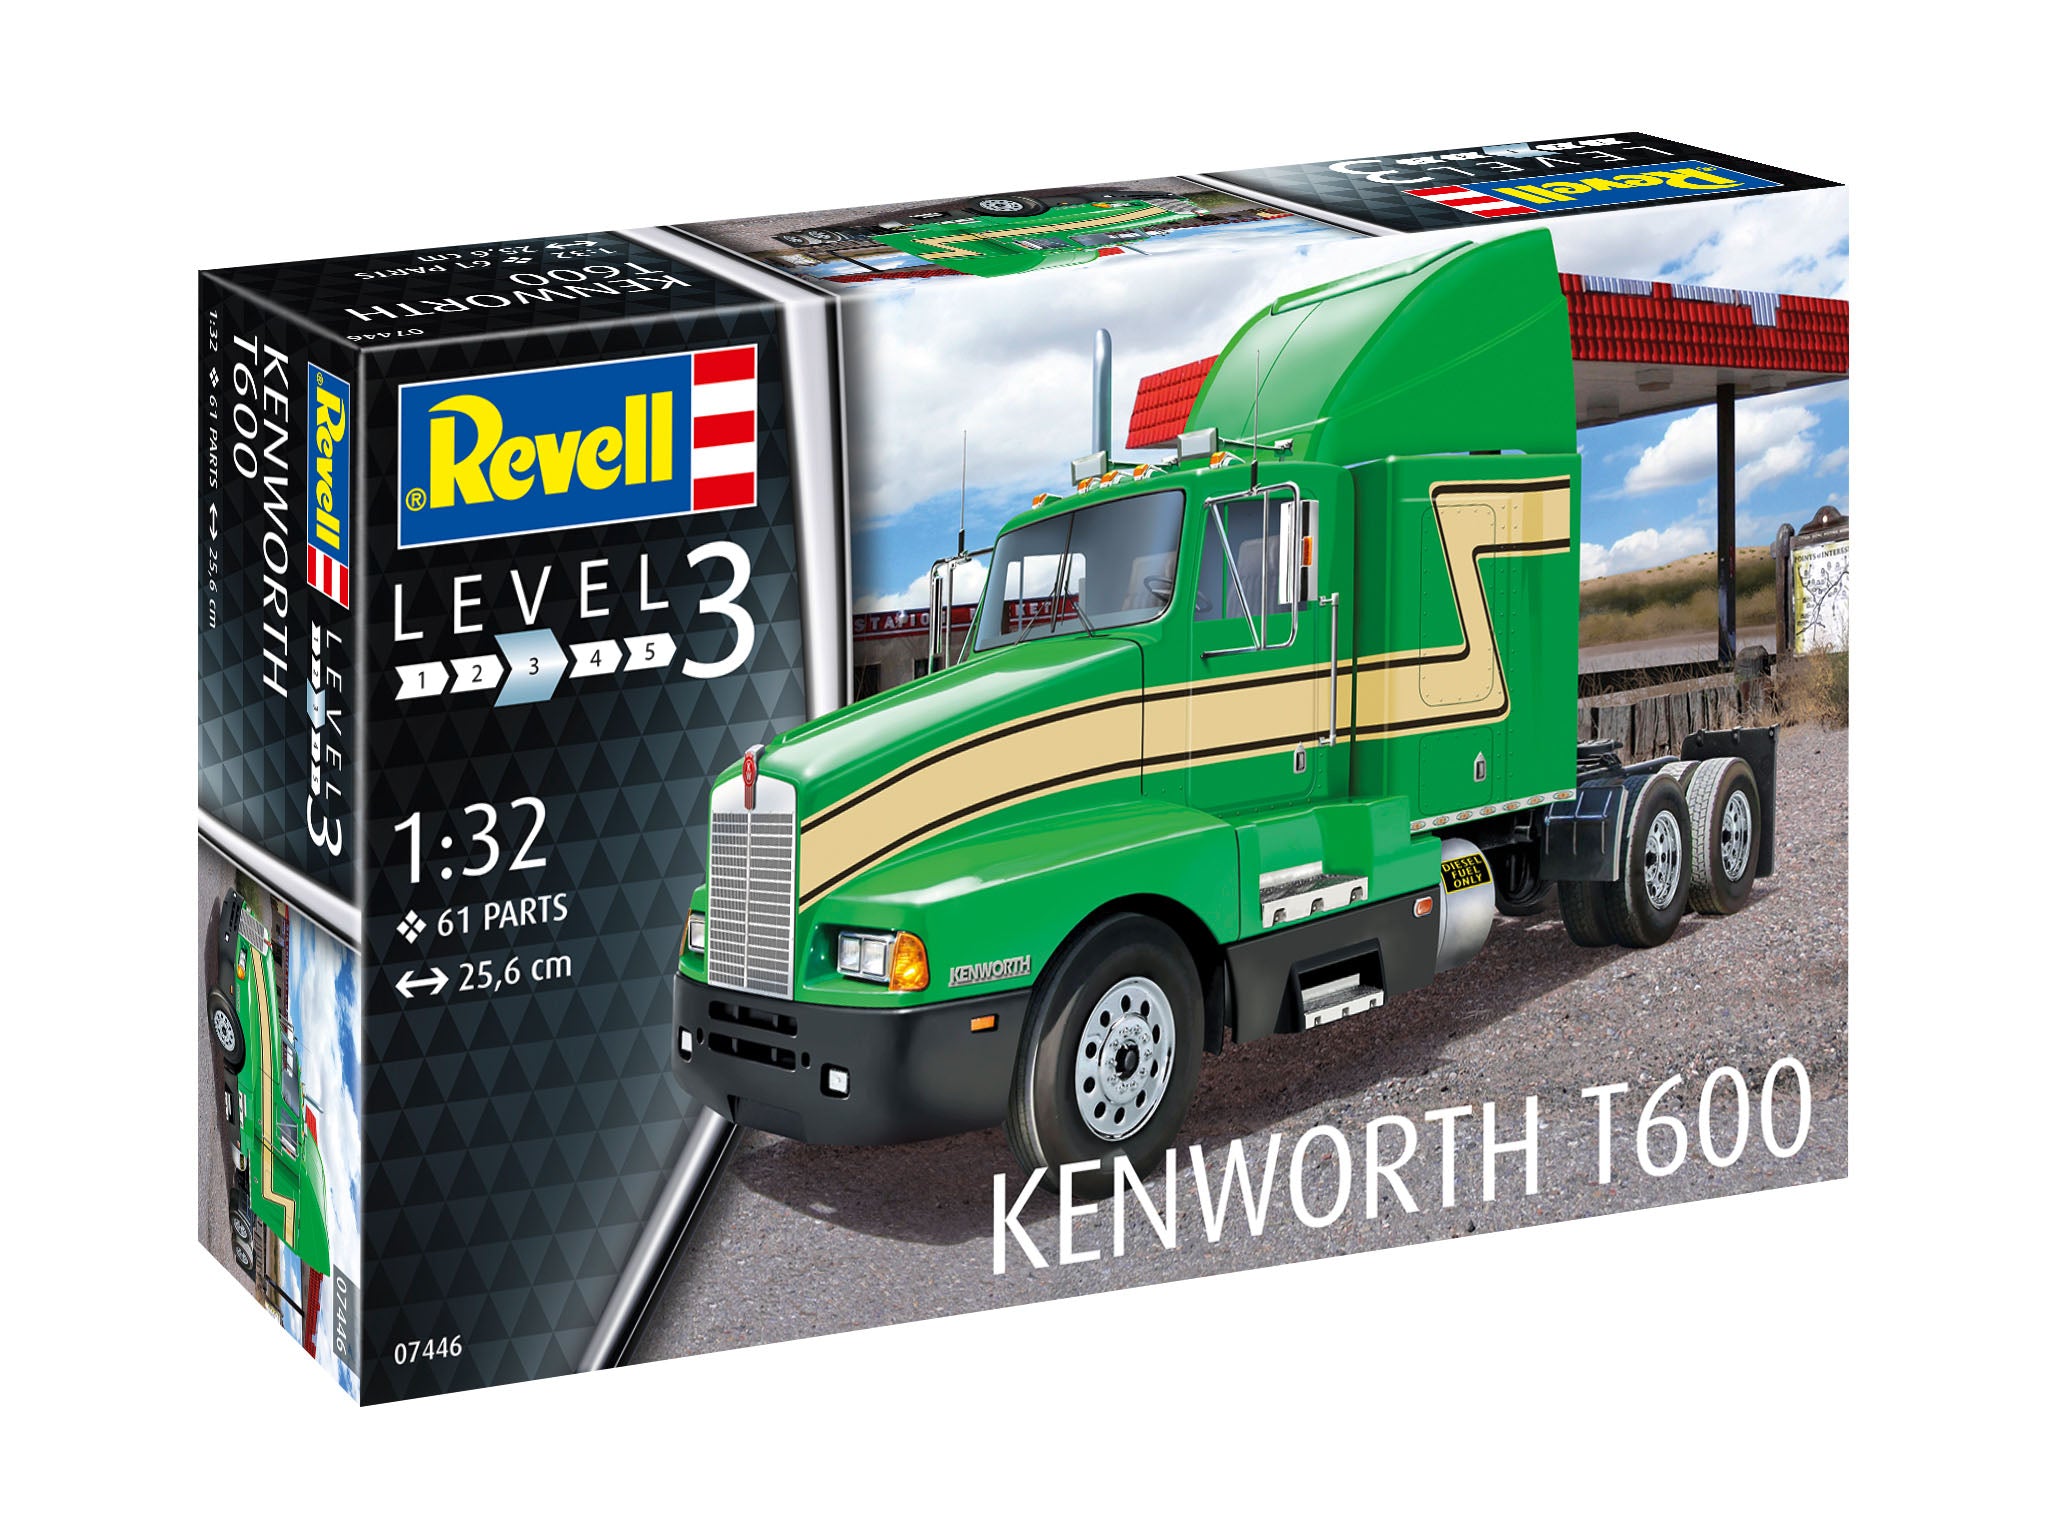 Kenworth T600 1:32 Scale Kit